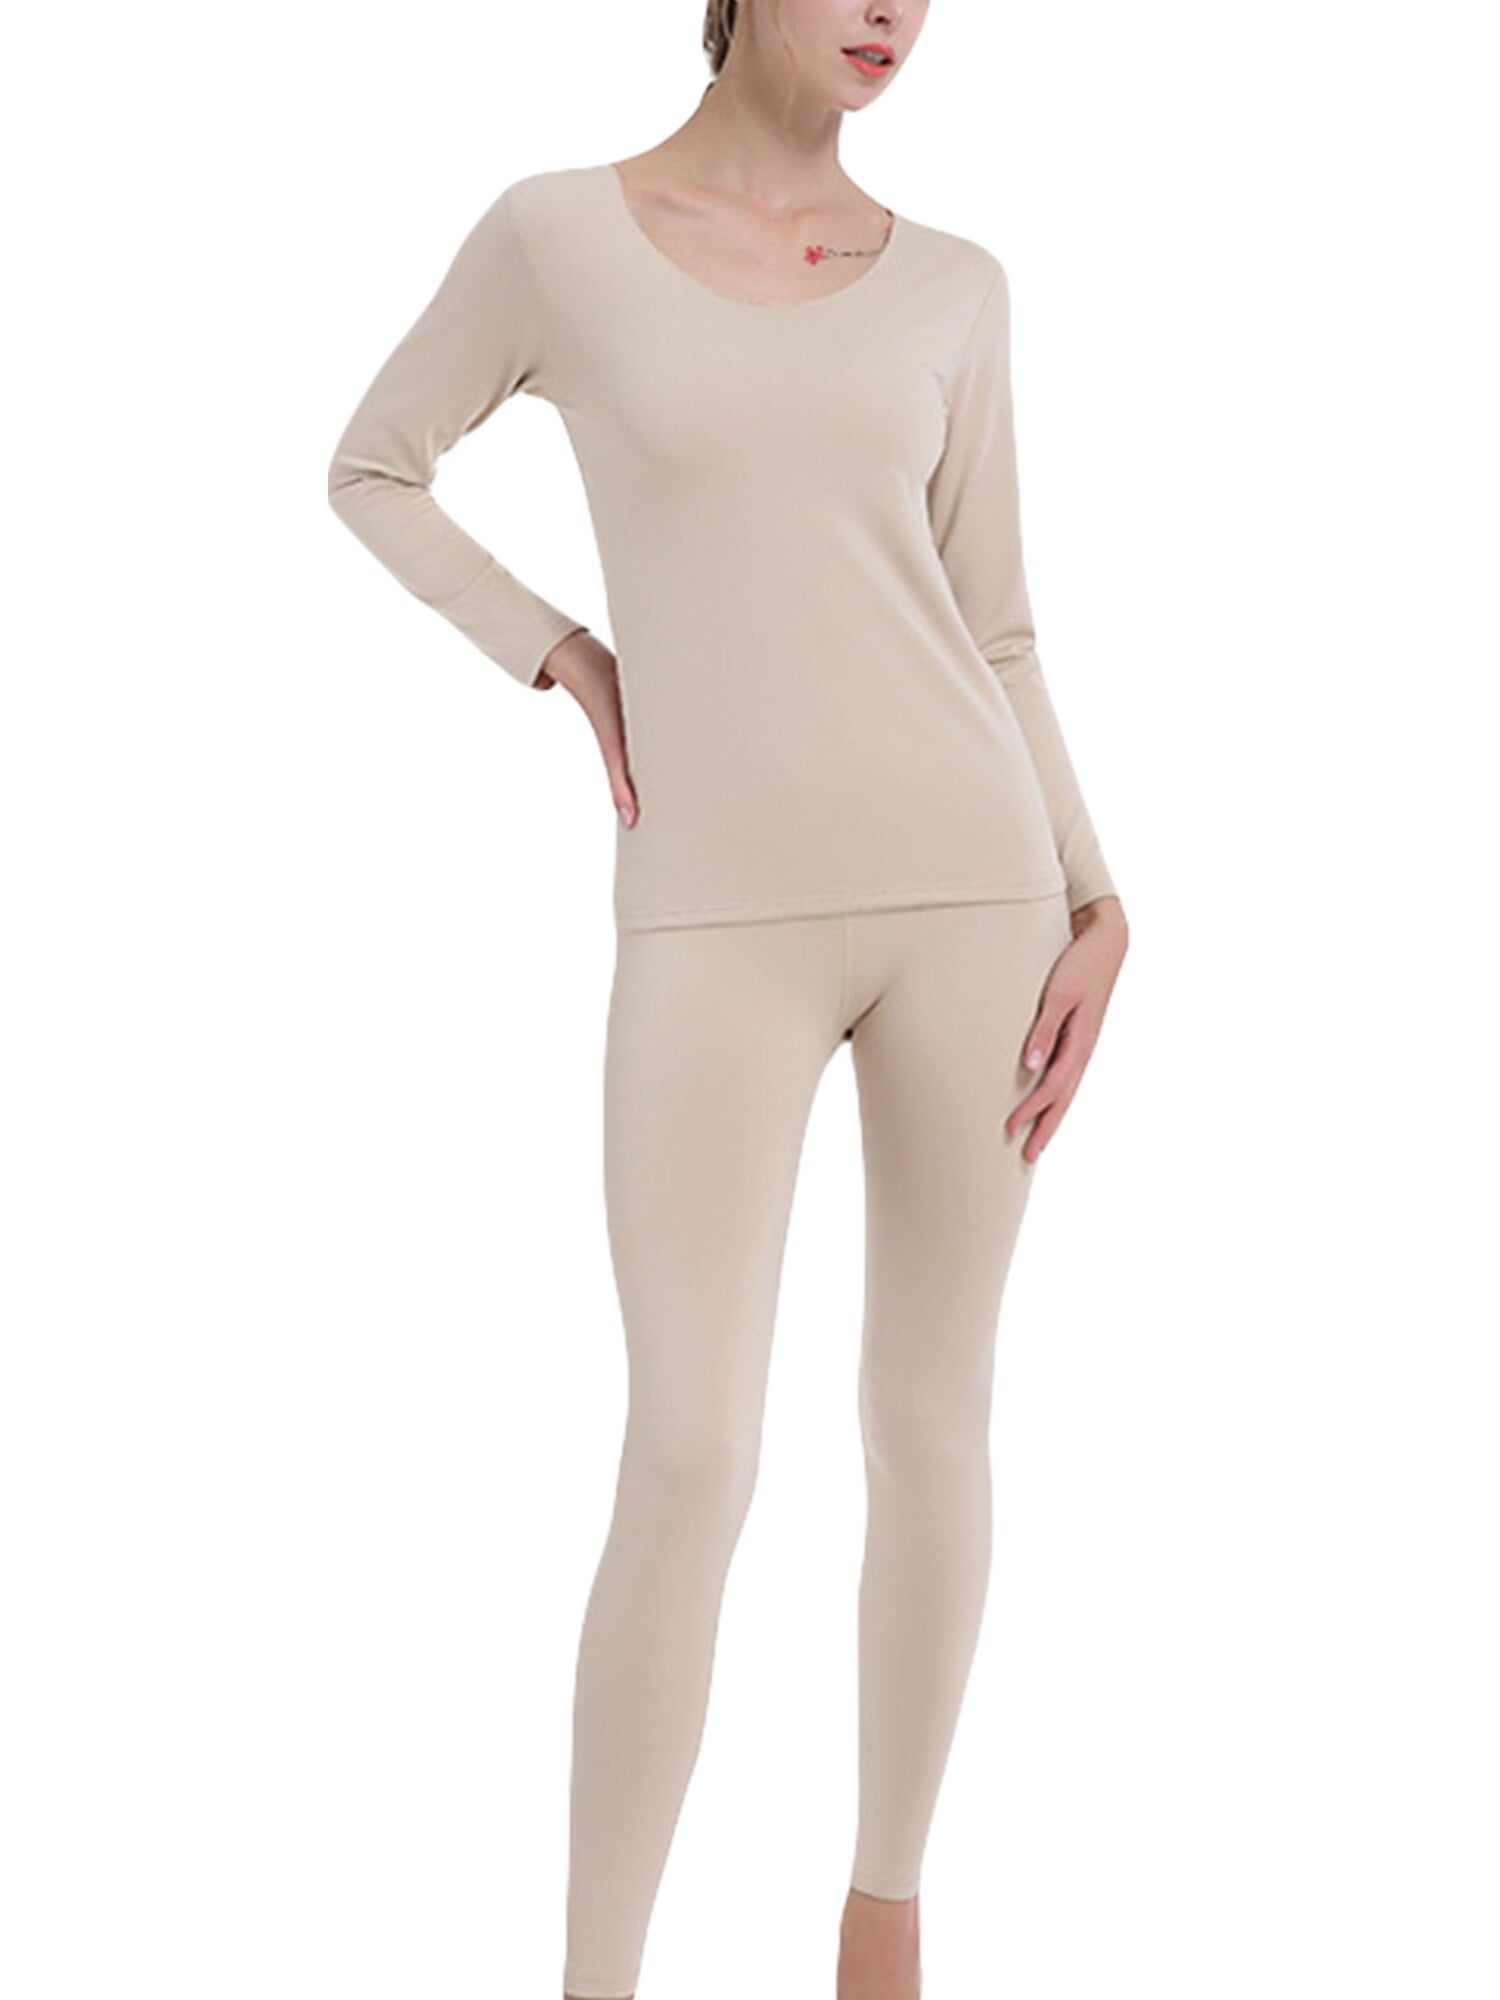 Womens Elastic Thermal Underwear Long Johns Top & Bottom Set S-4XL Colors Choose 